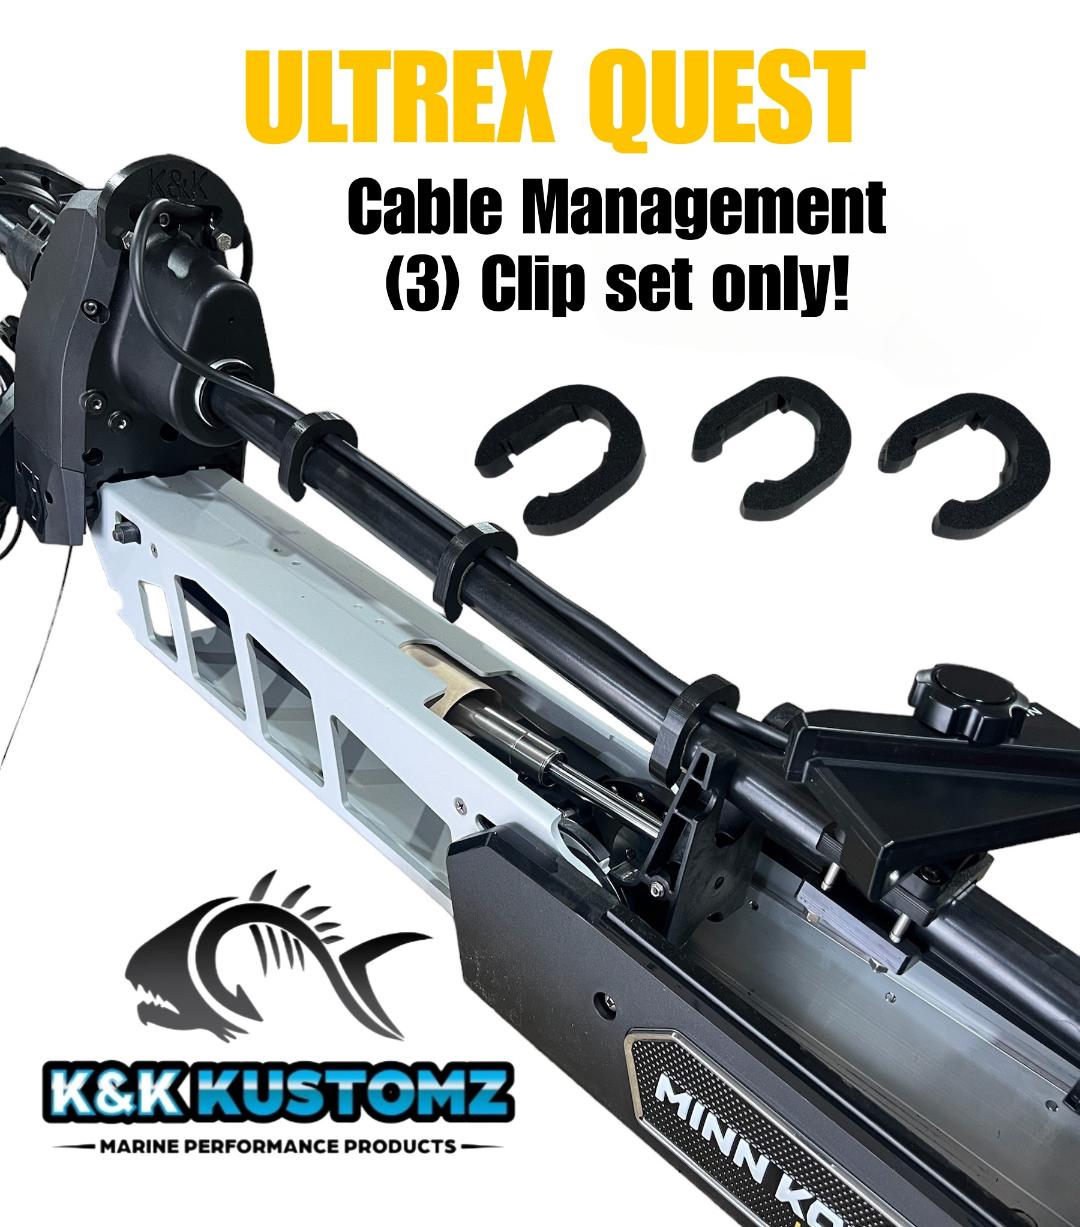 Ultrex Quest Cable Management (3) clip only set – K & K Kustomz